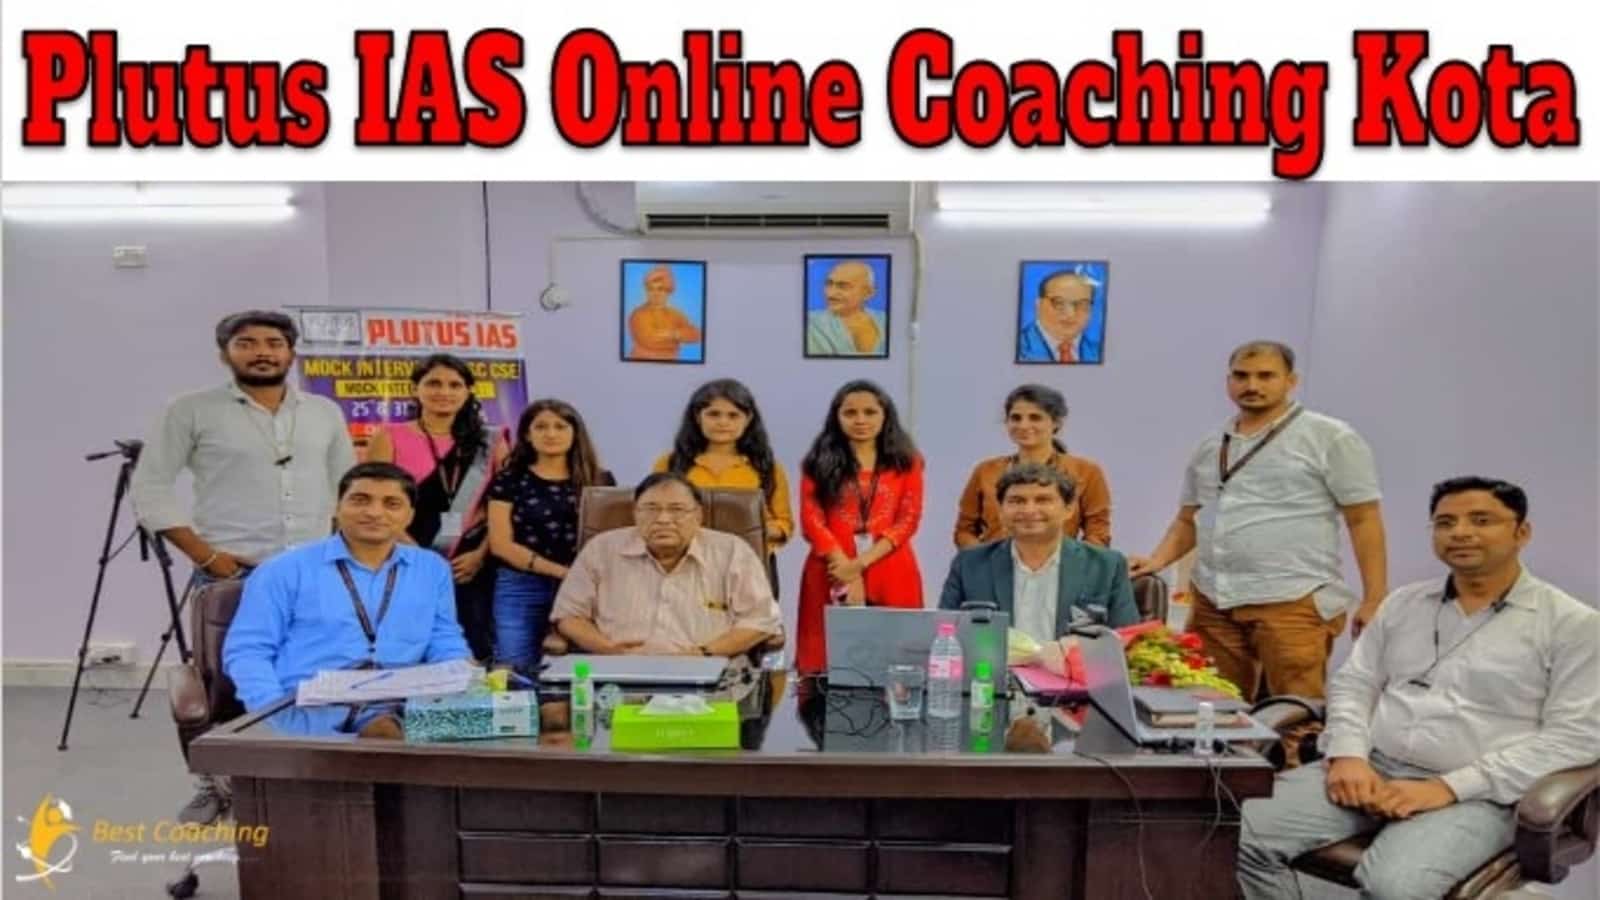 Plutus IAS Online Coaching Kota